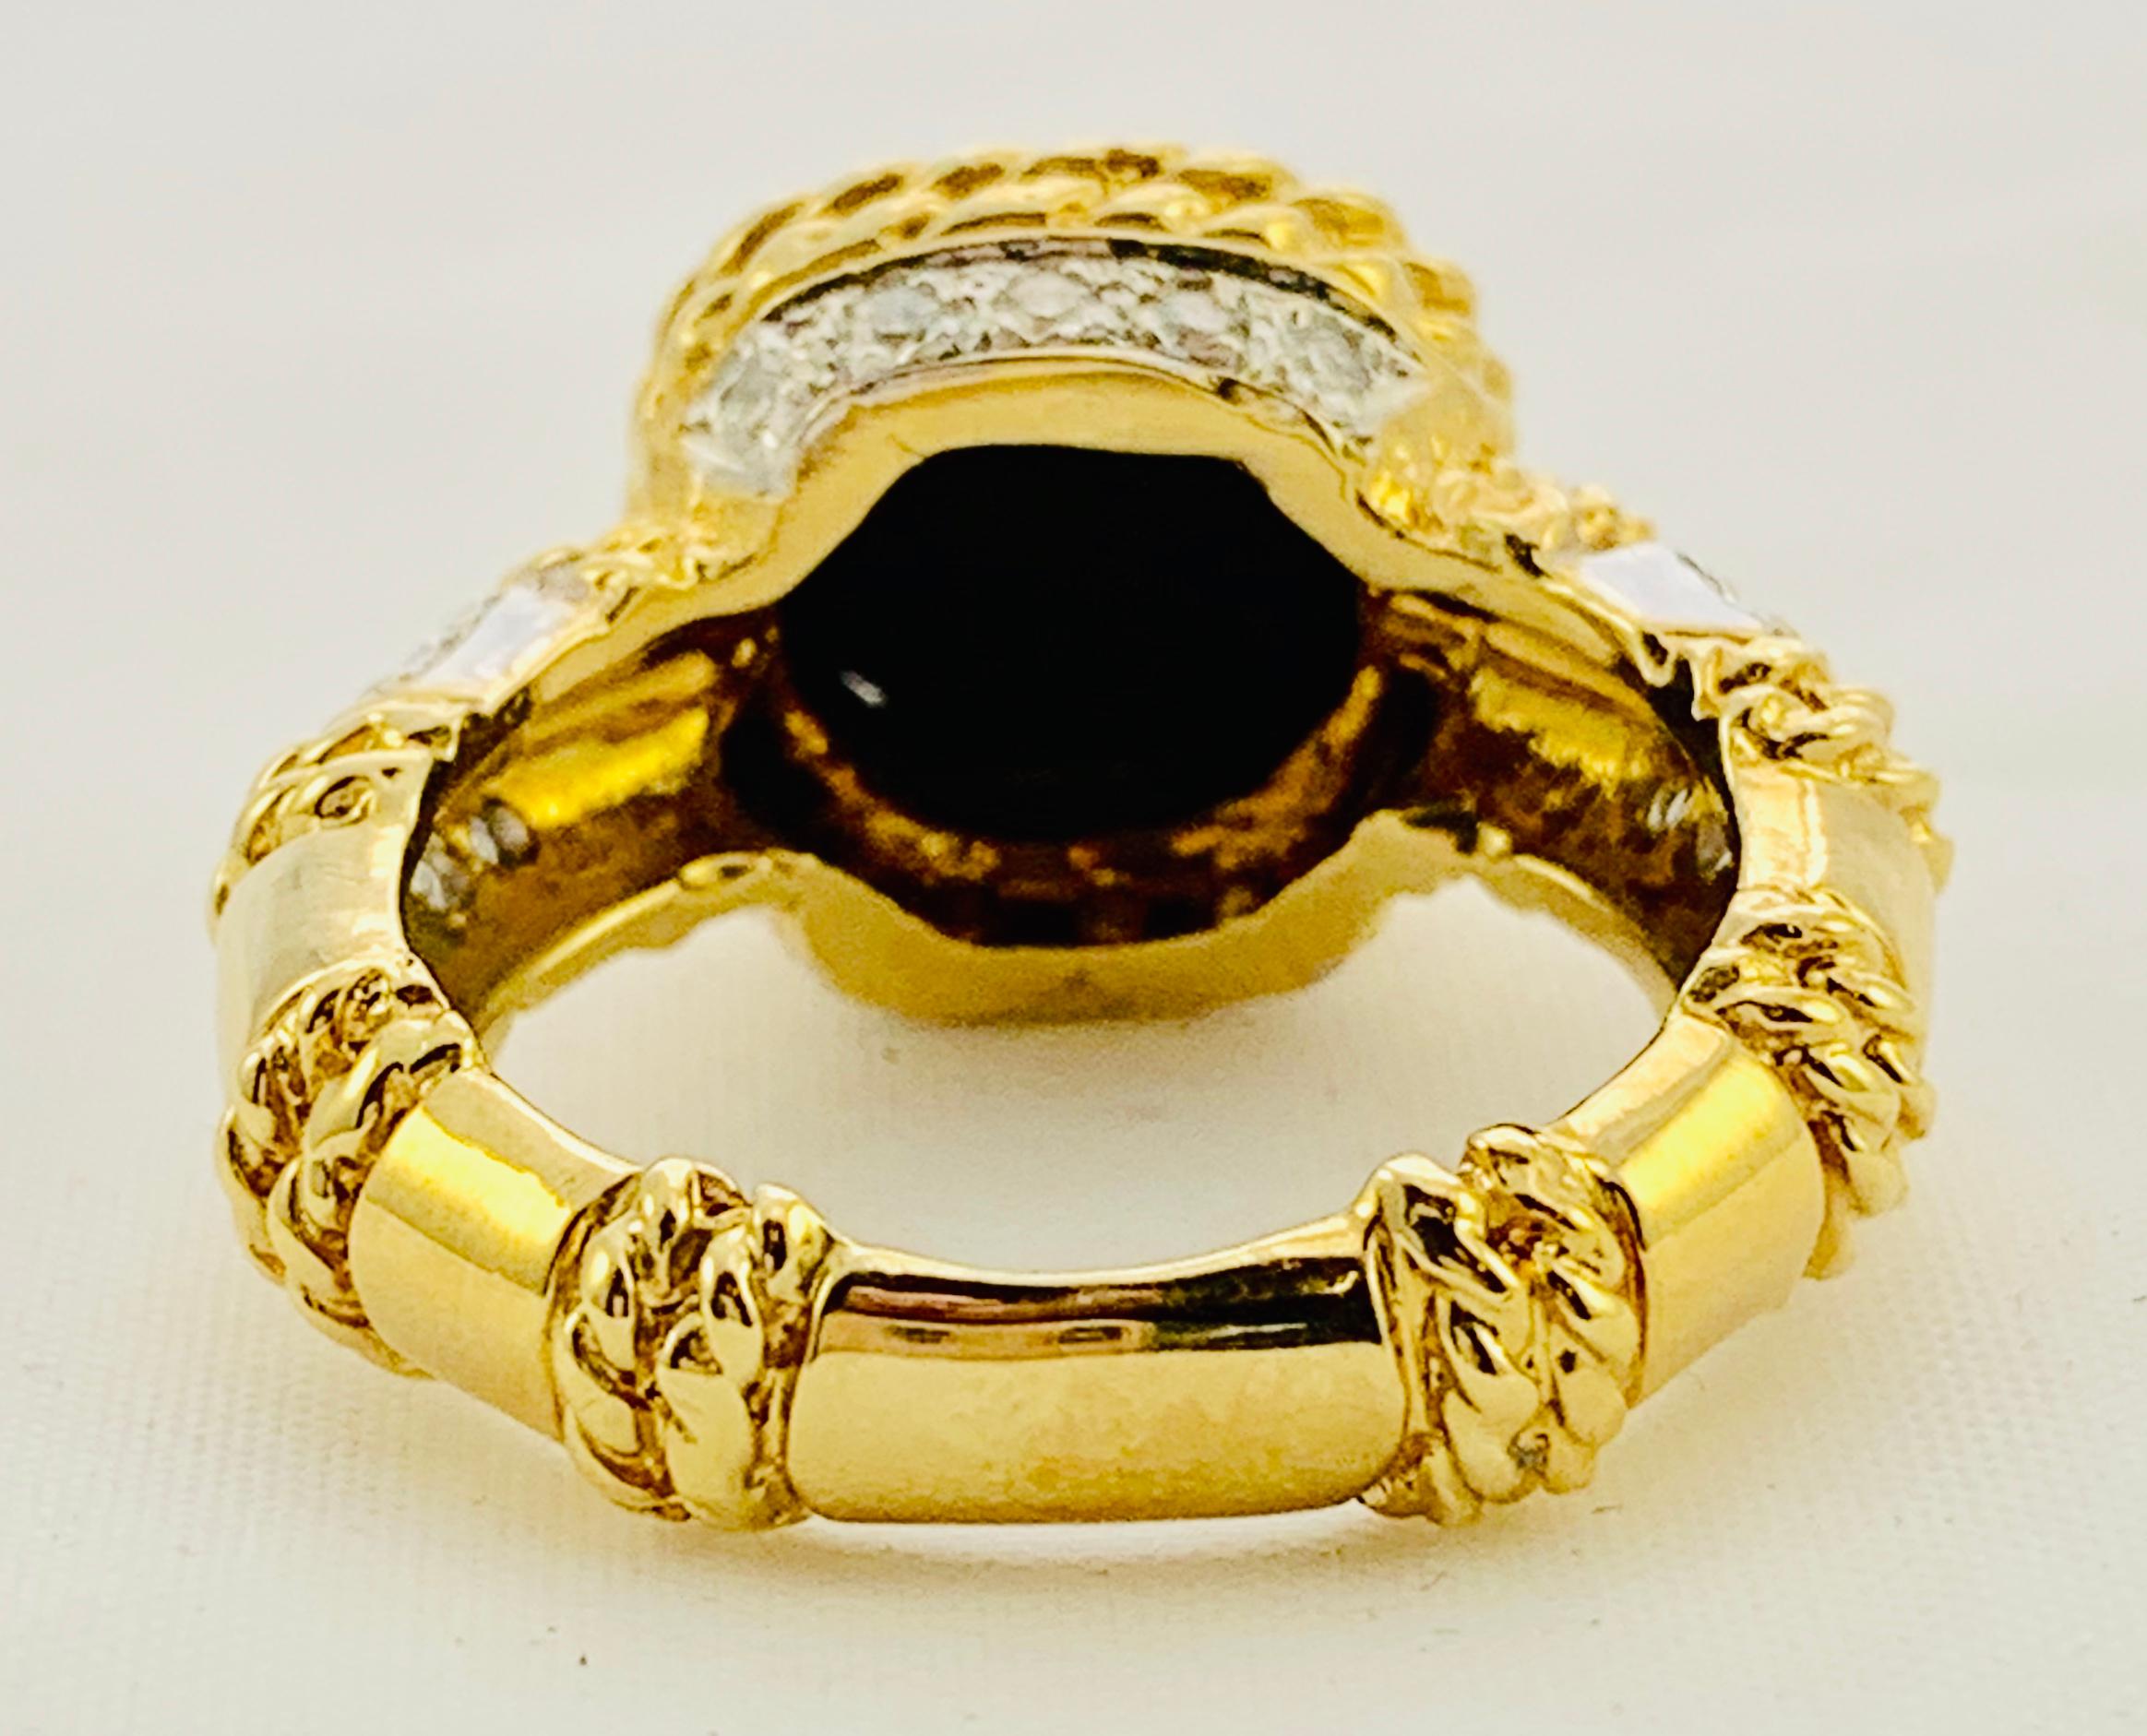 Designer Cassis 18K yellow Gold, Diamond & Onyx ladies Ring Size 5.75  3